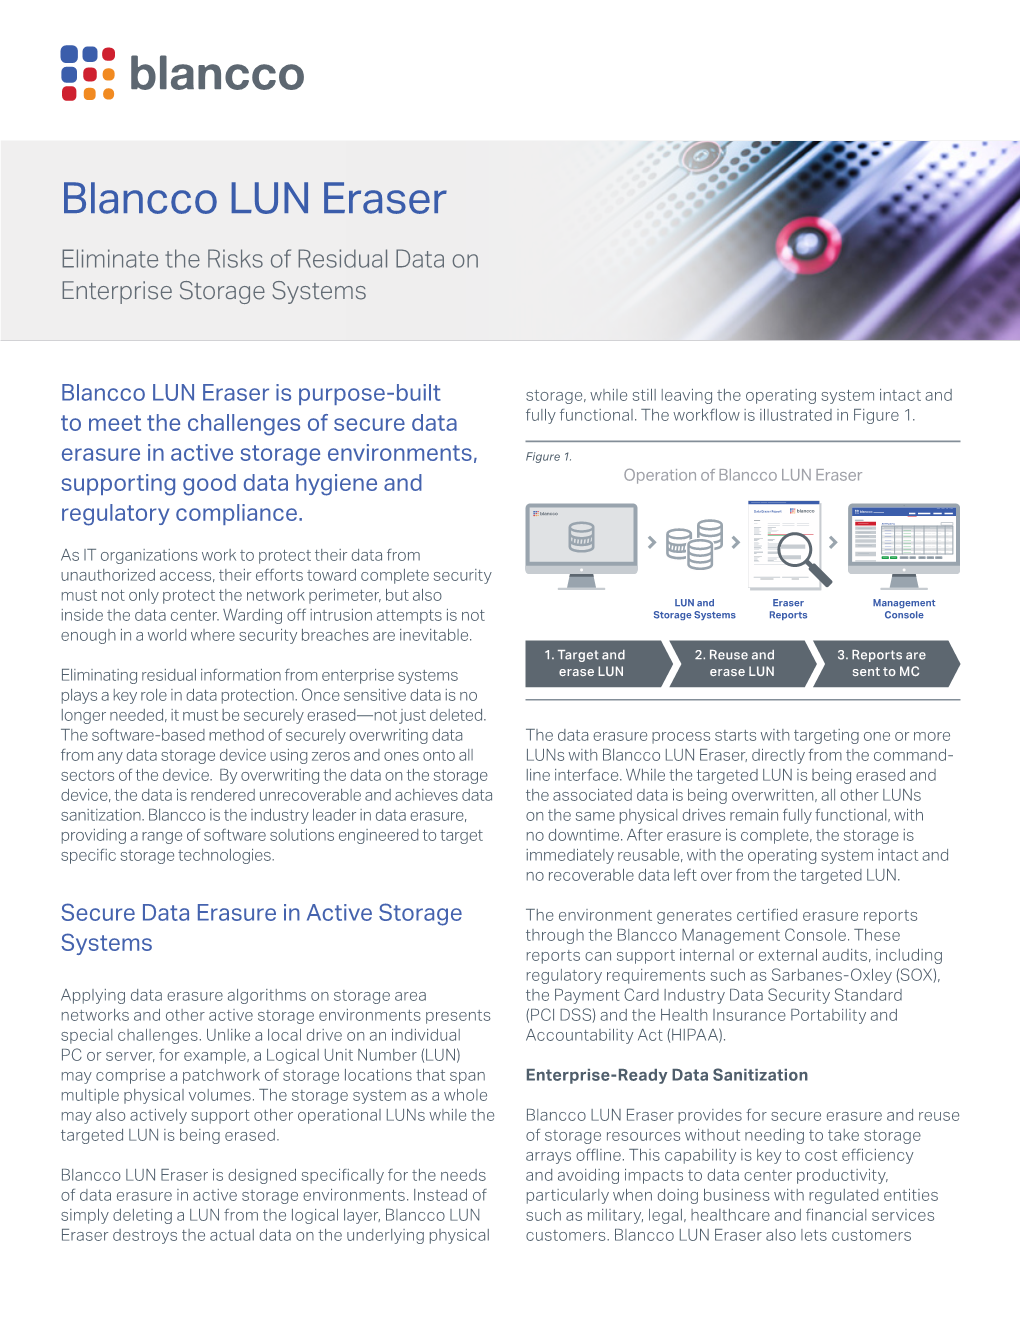 Blancco LUN Eraser Eliminate the Risks of Residual Data on Enterprise Storage Systems